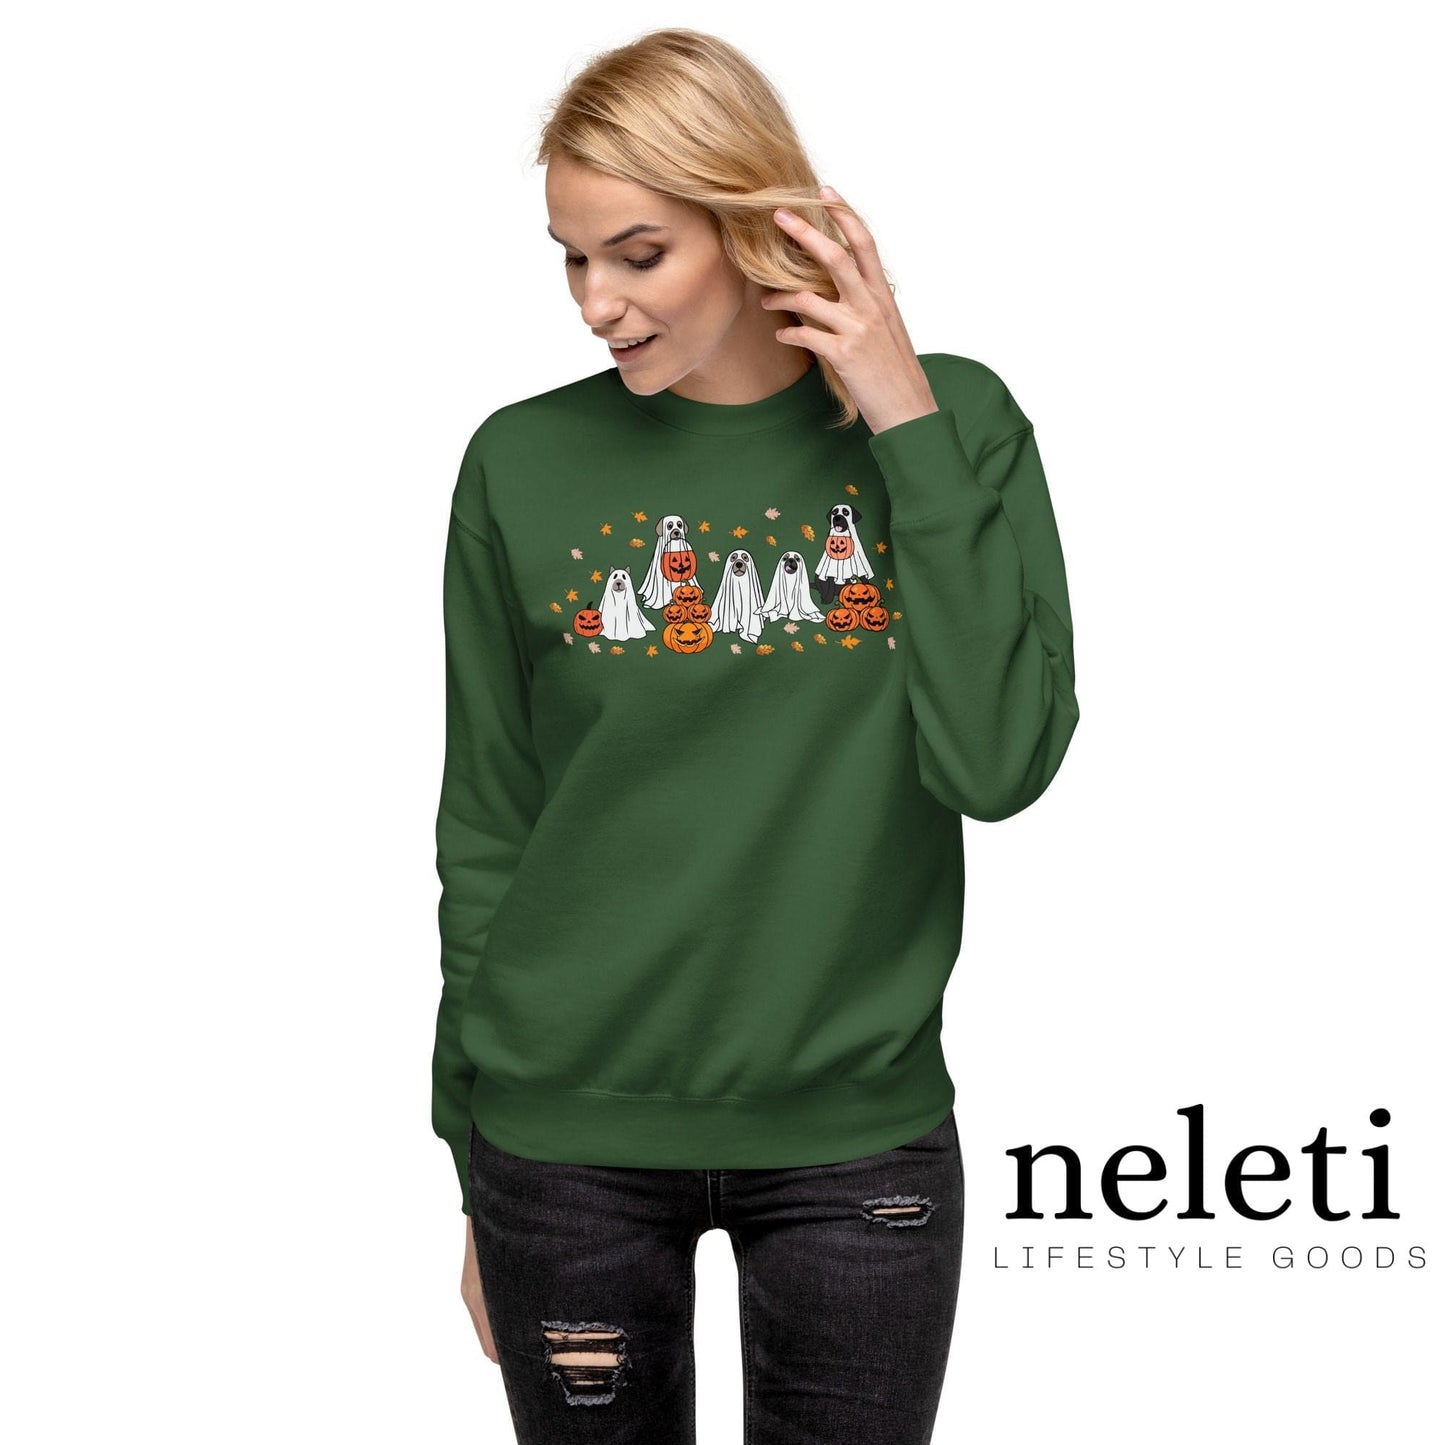 neleti.com-haloween-forest-green-sweatshirt-for-dog-lovers